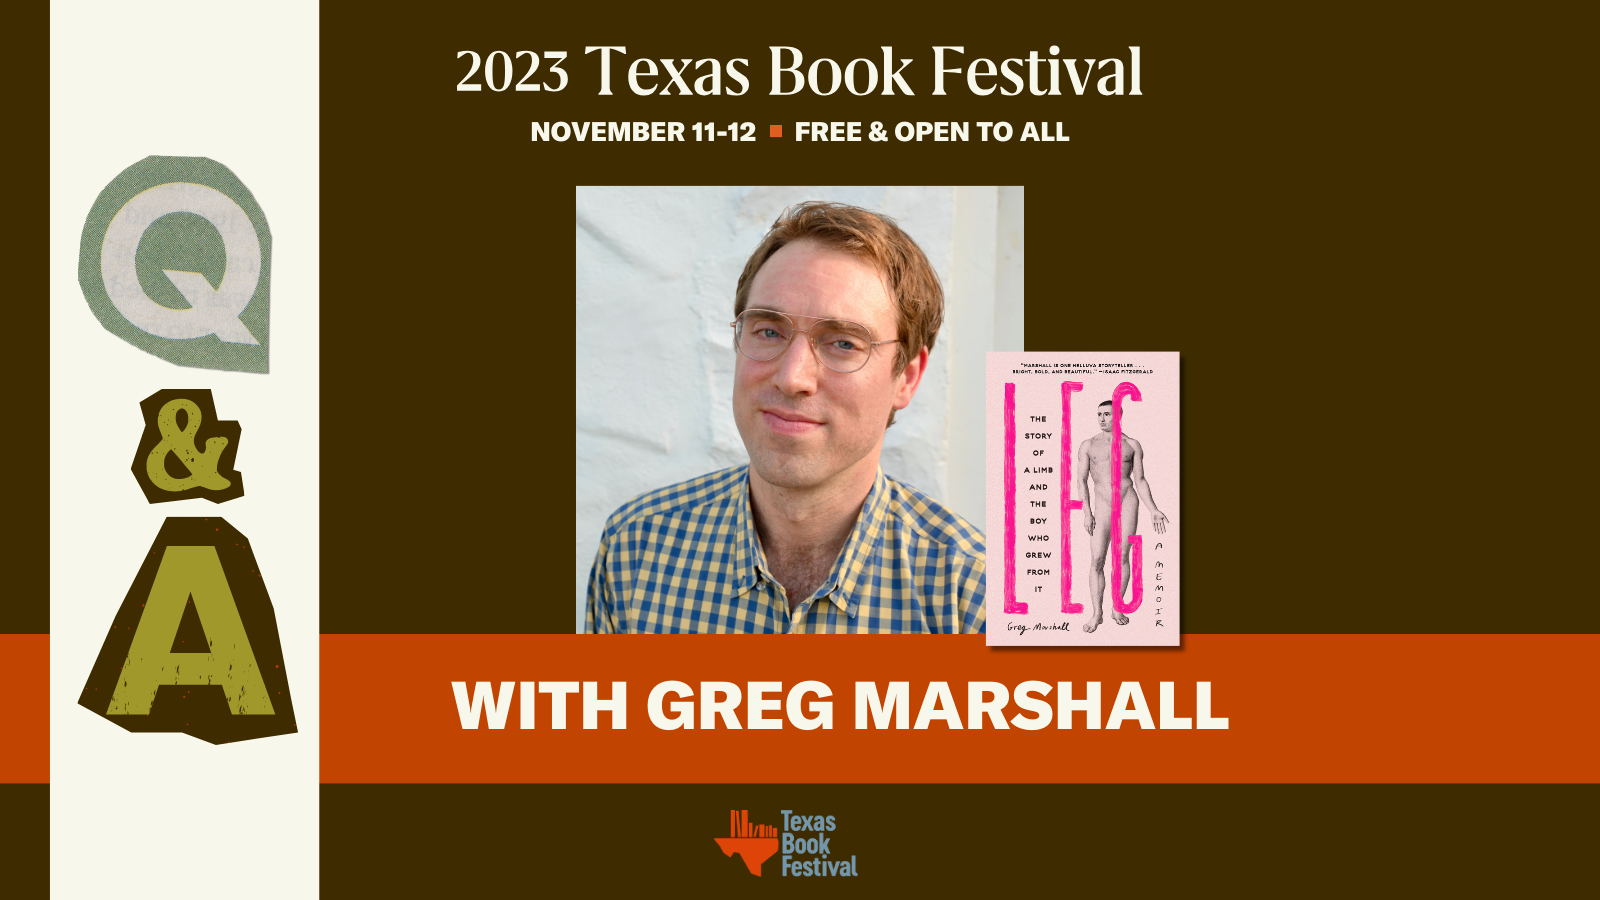 Q&A With Greg Marshall